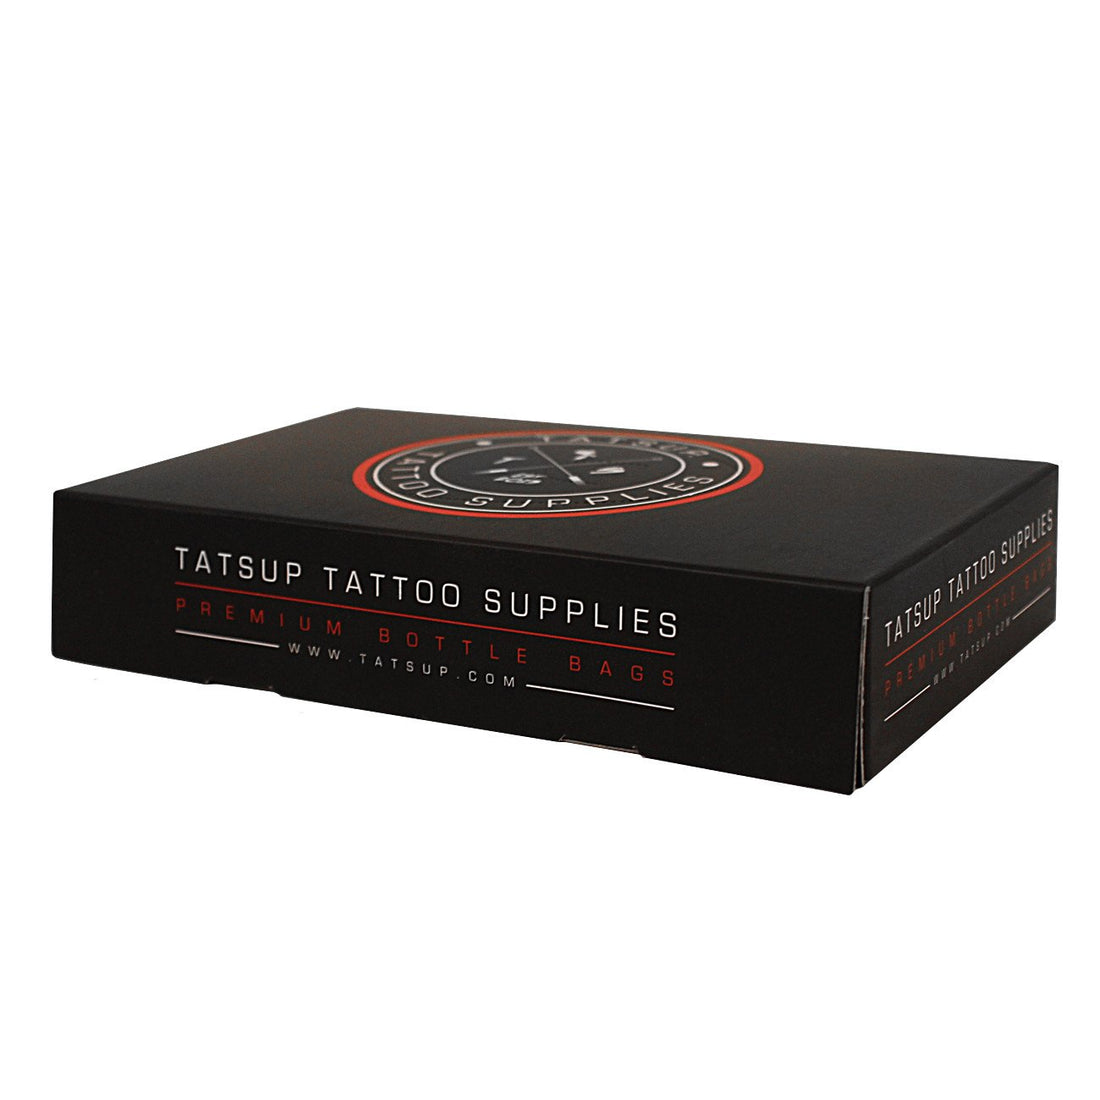 Tatsup Premium Bottle Bags Studio Supplies Tatsup 